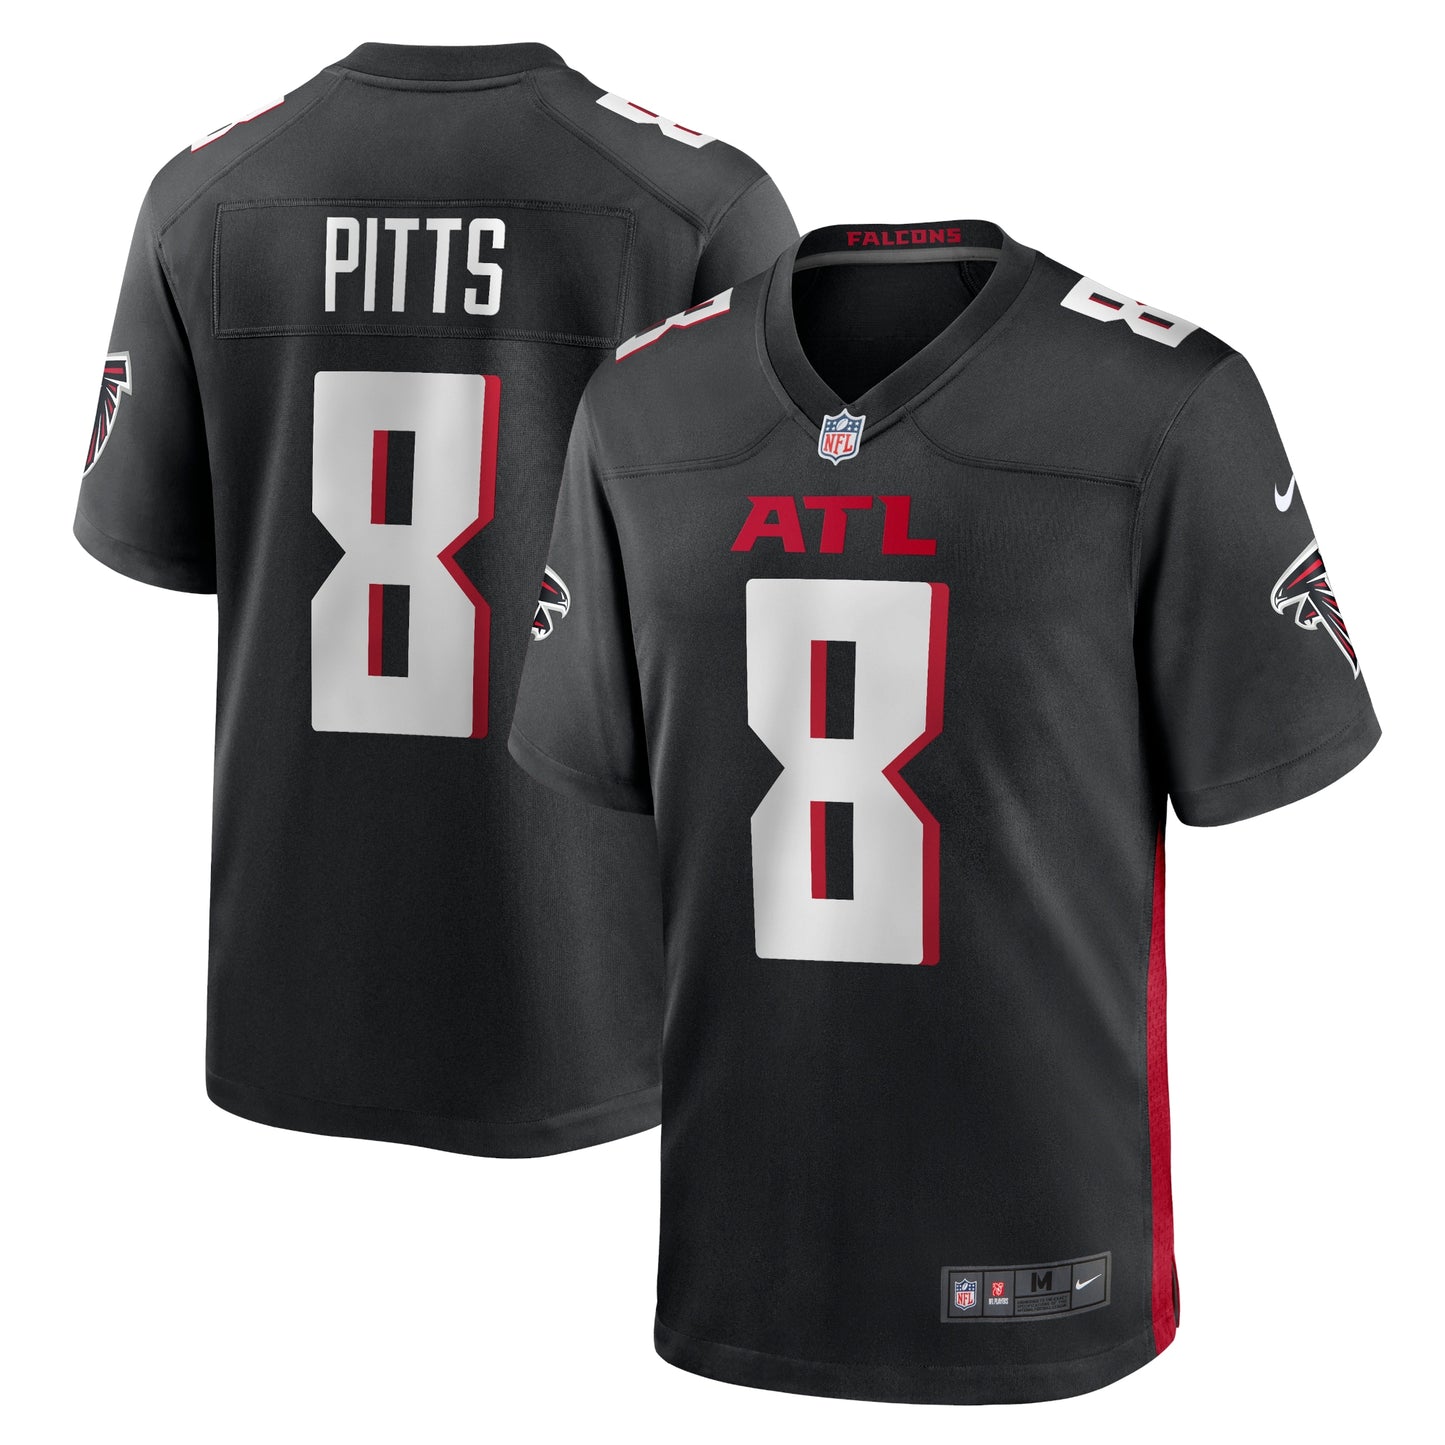 Kyle Pitts Atlanta Falcons Nike Youth Game Jersey - Black